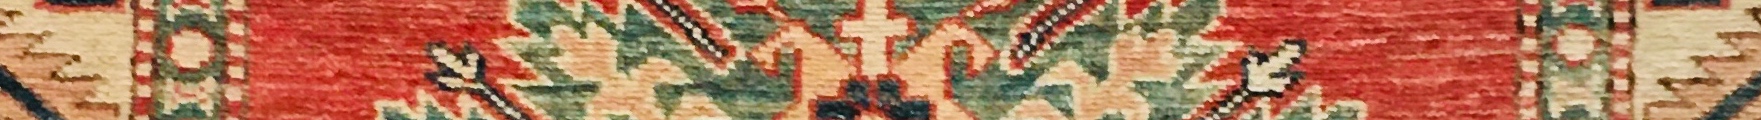 decorative rug detail